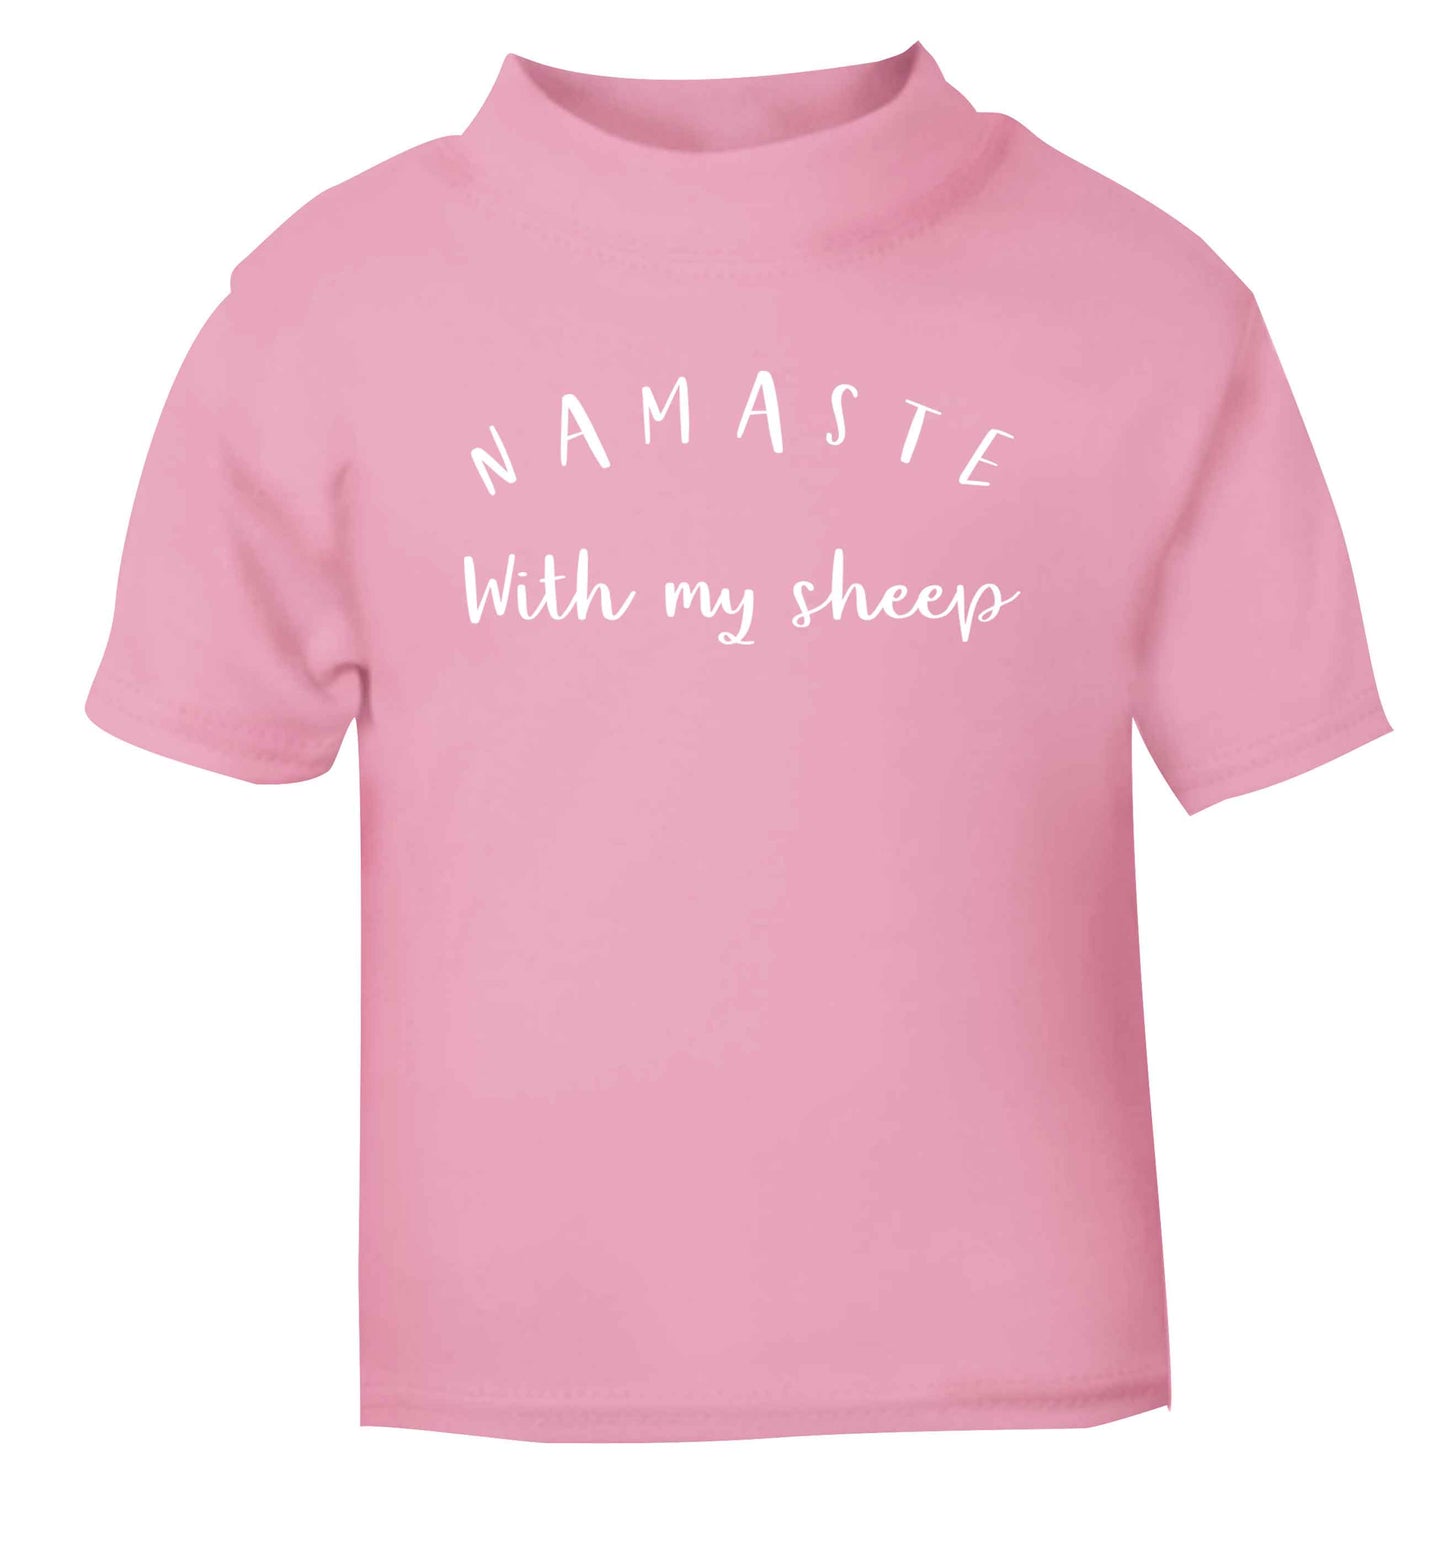 Namaste with my sheep light pink Baby Toddler Tshirt 2 Years